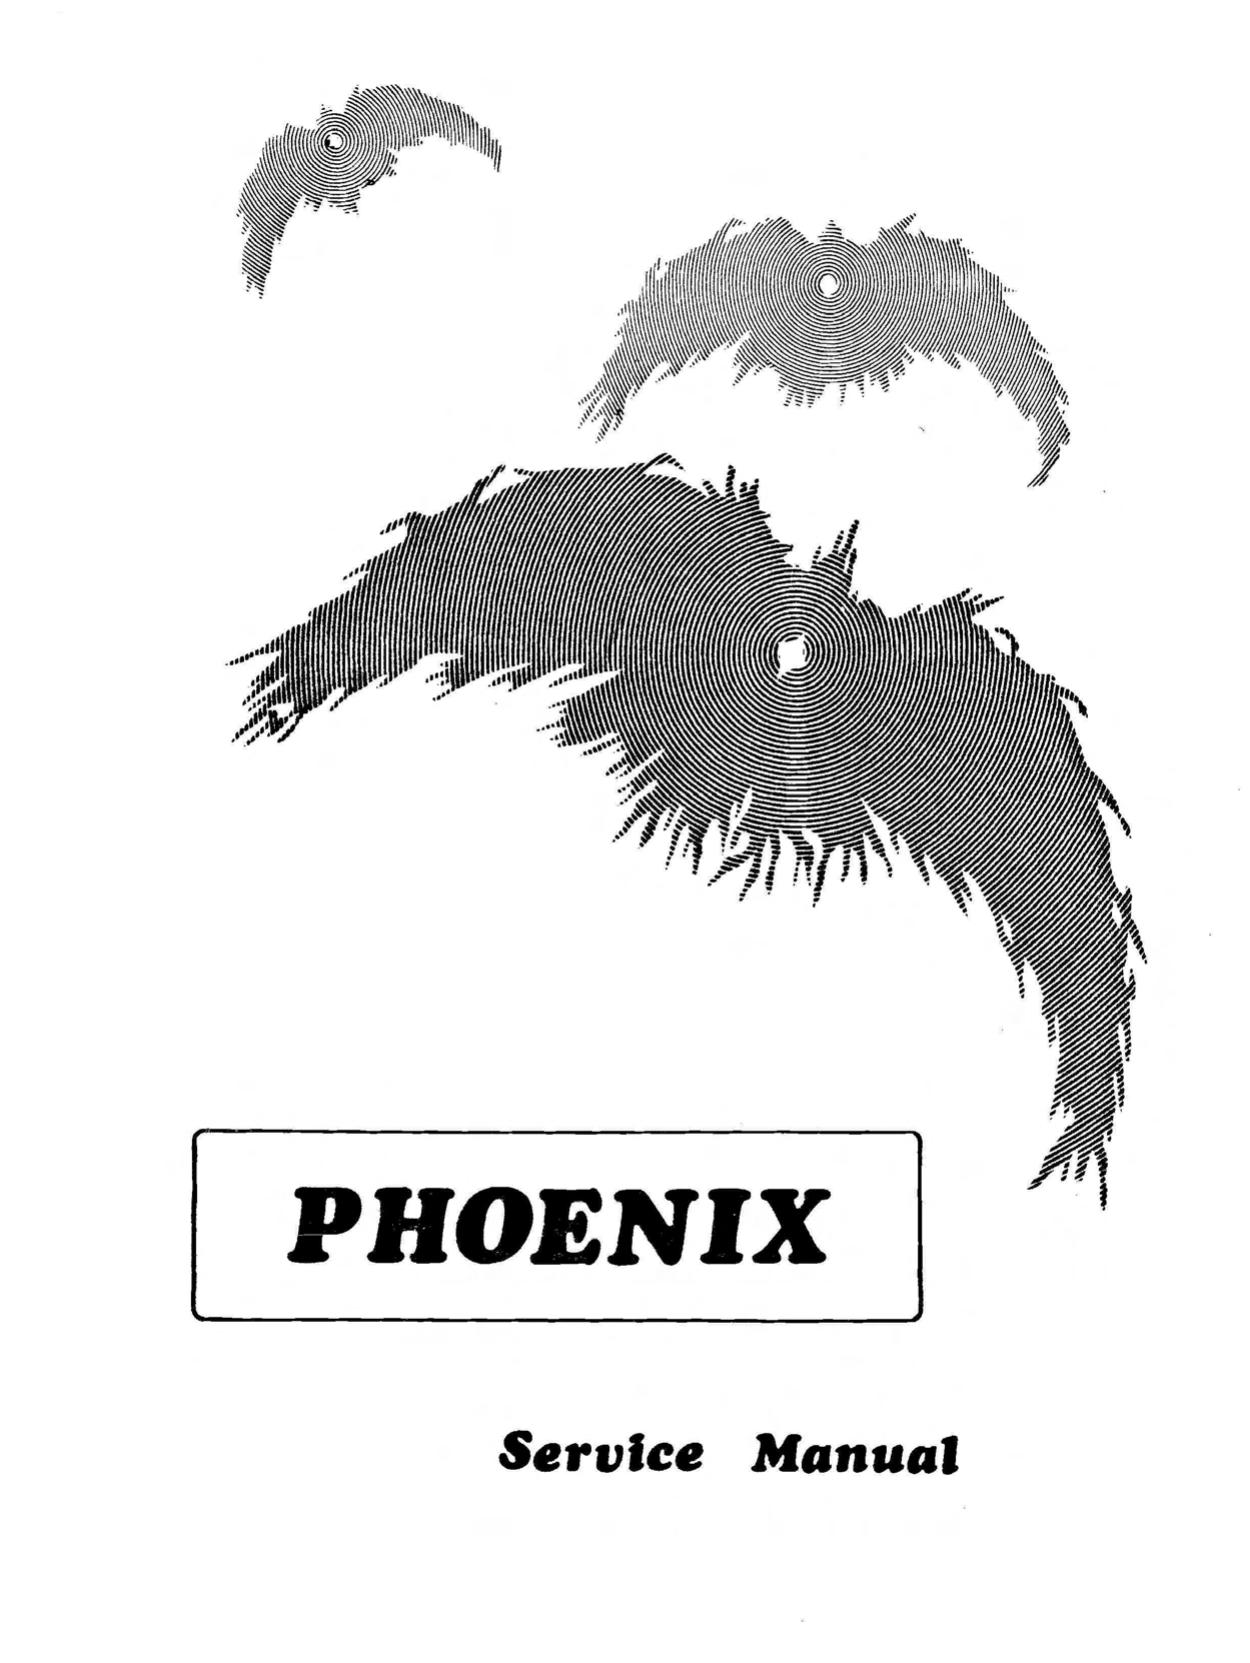 Phoenix Service Manual (Zaccaria ITALY)